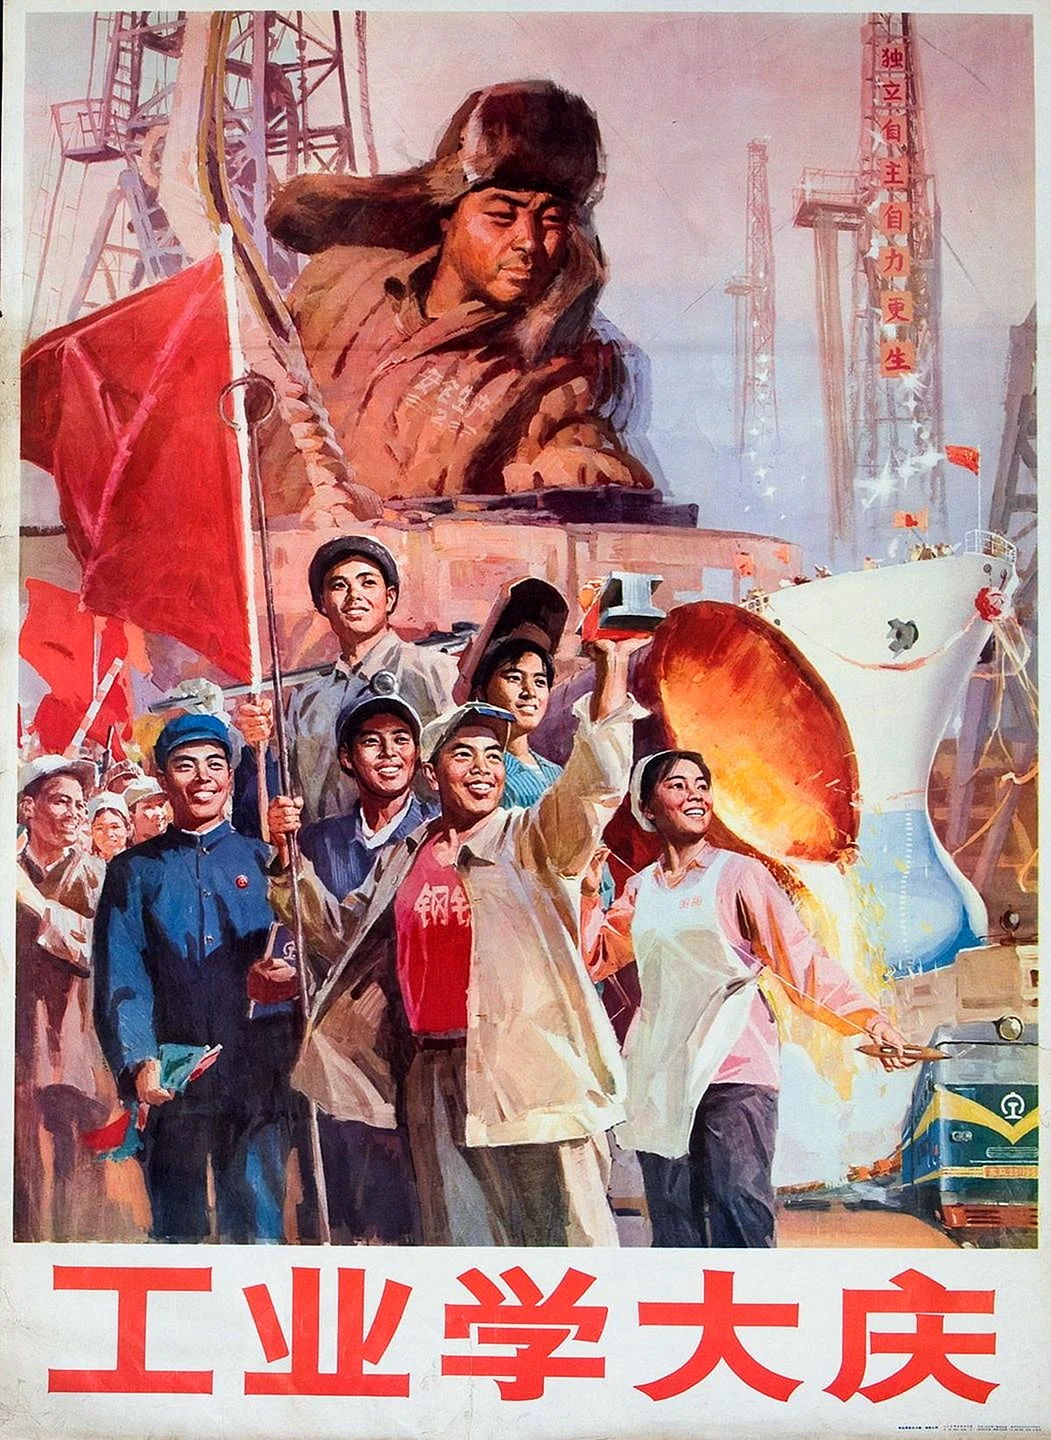 Китайский агитационный плакат эпохи Мао